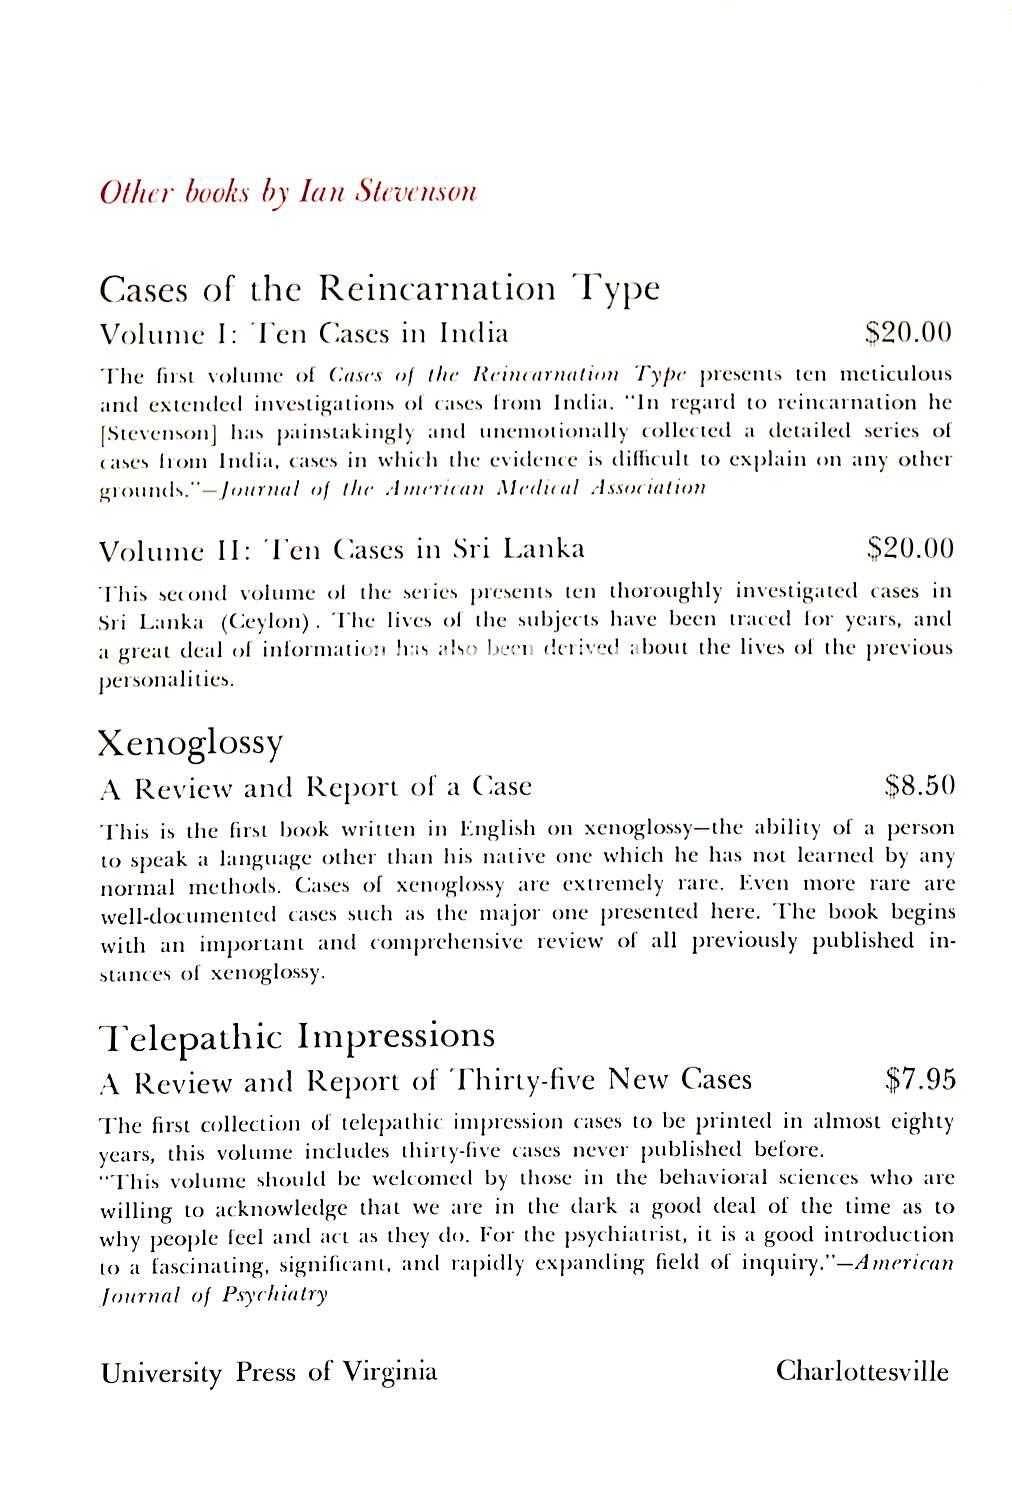 Twenty Cases Suggestive of Reincarnation